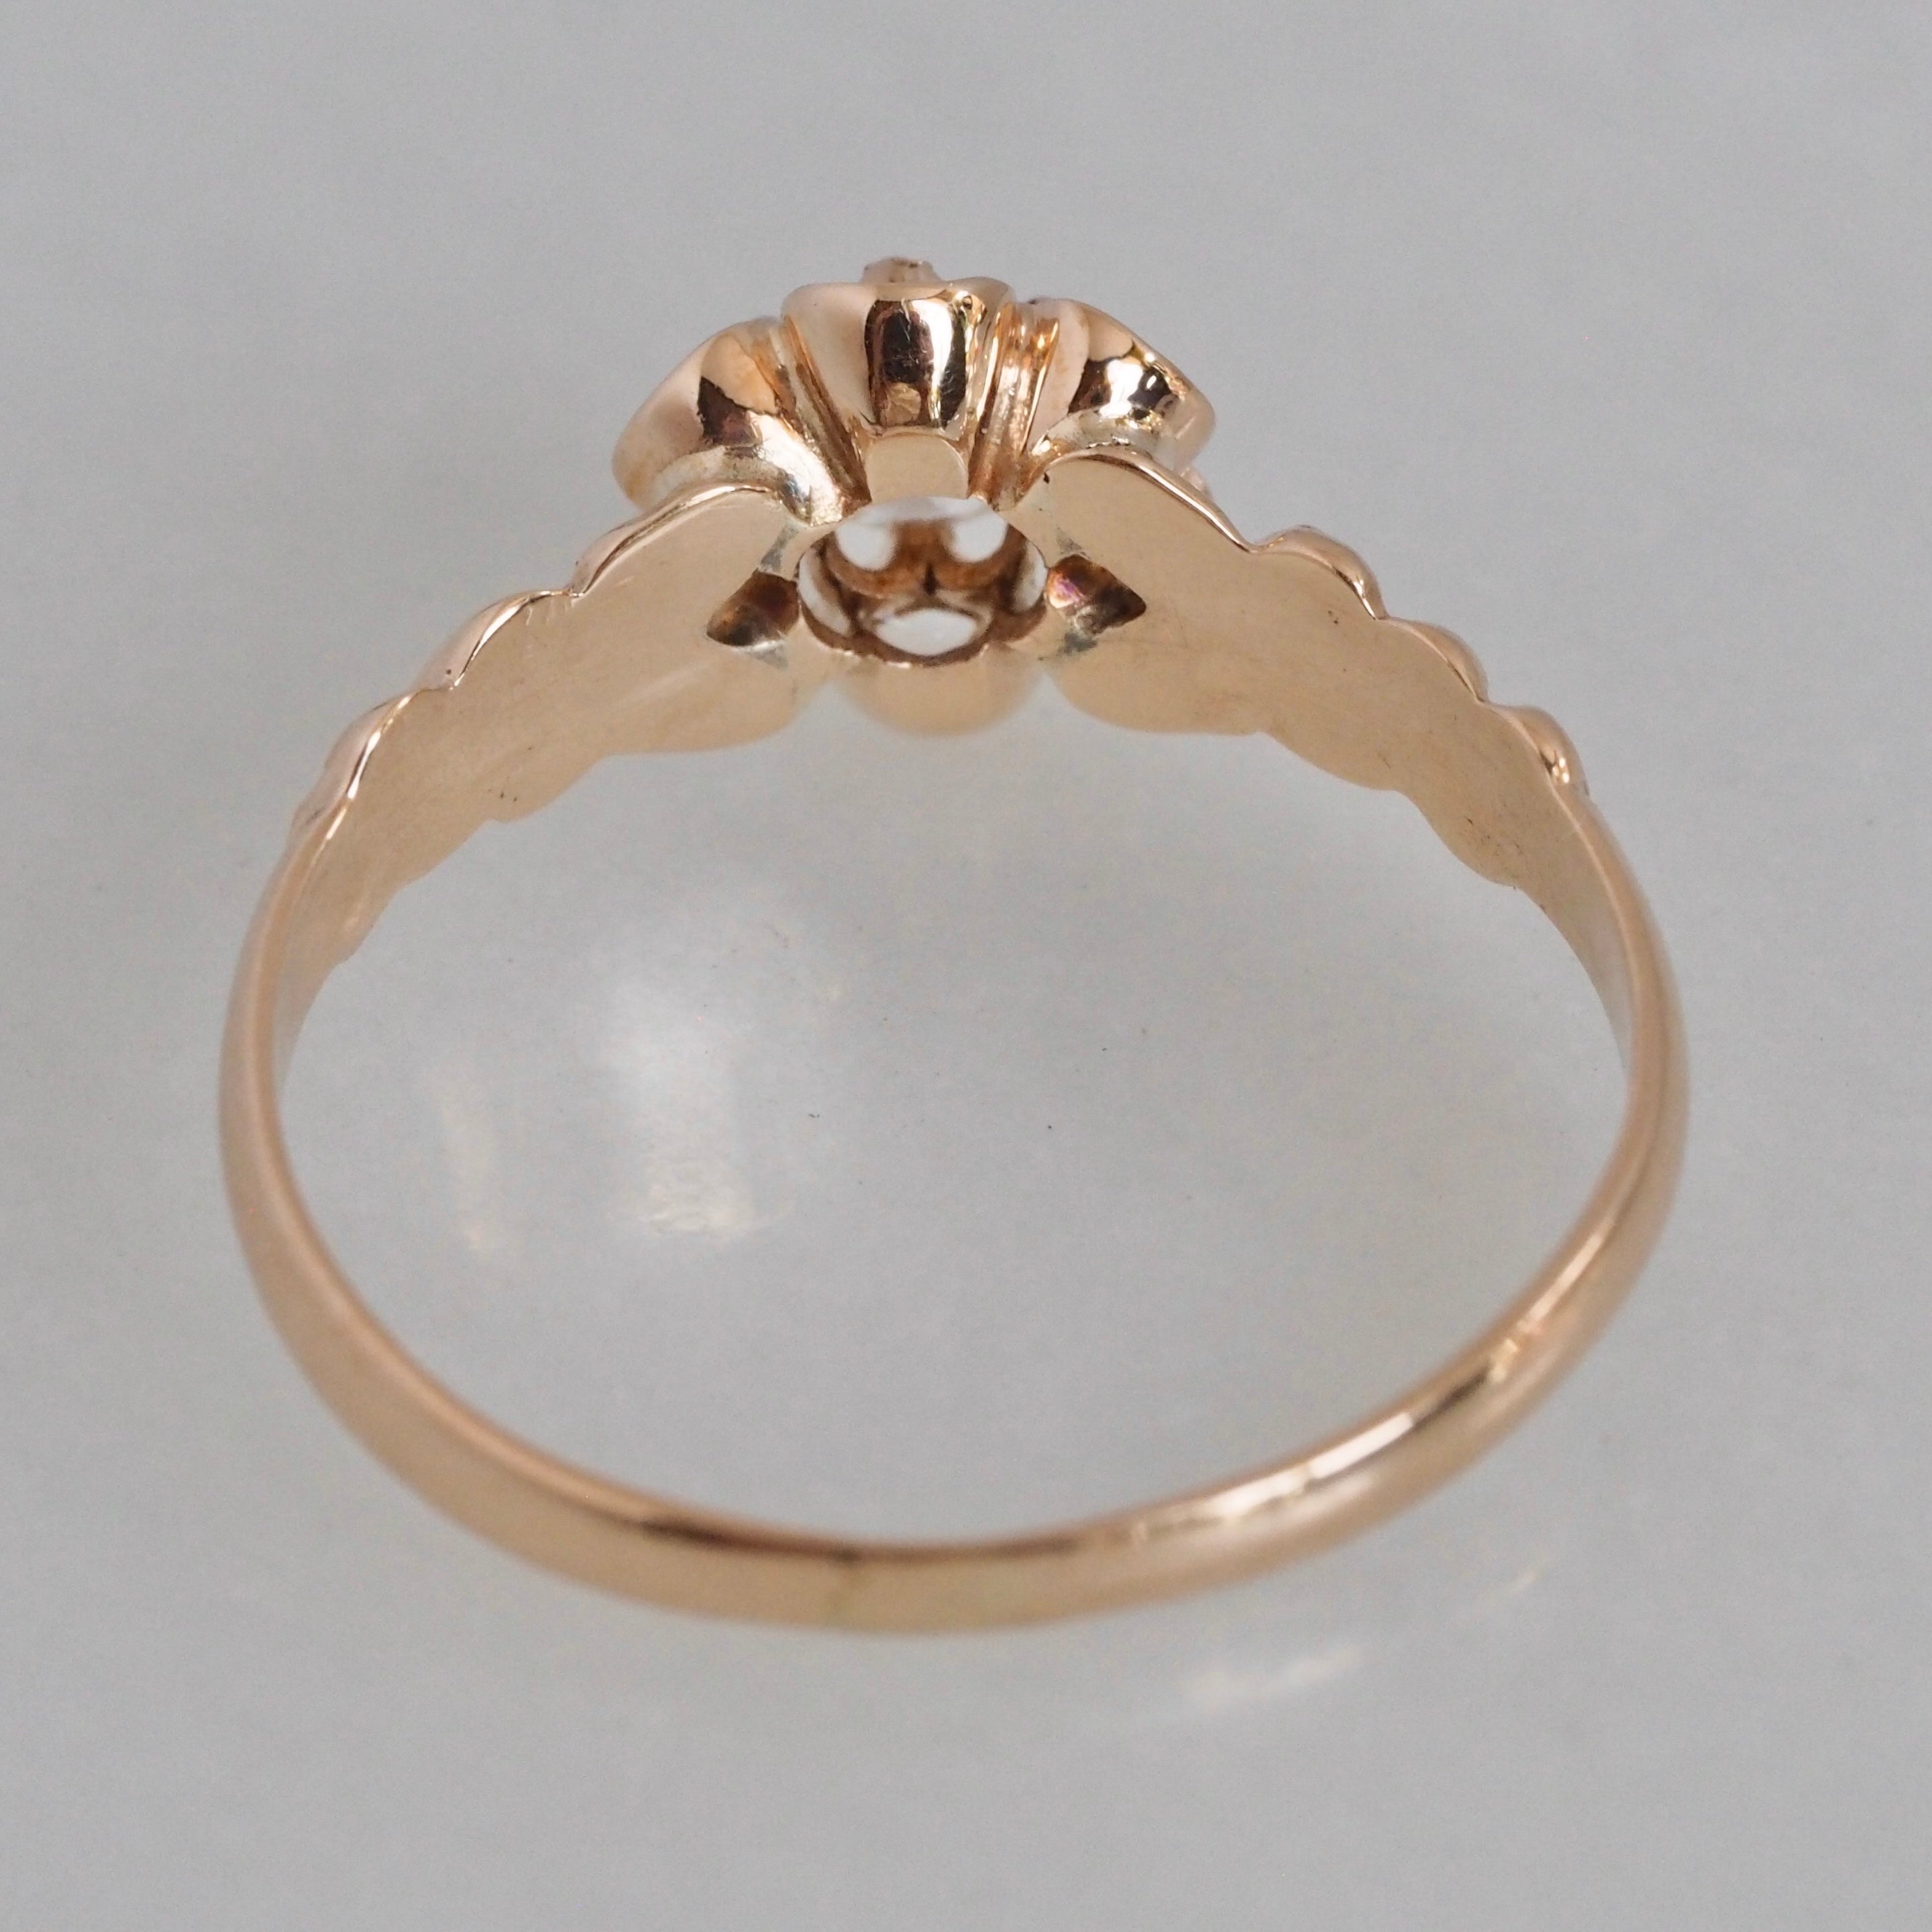 Antique Victorian 10k Gold Old European Cut Diamond Flower Ring